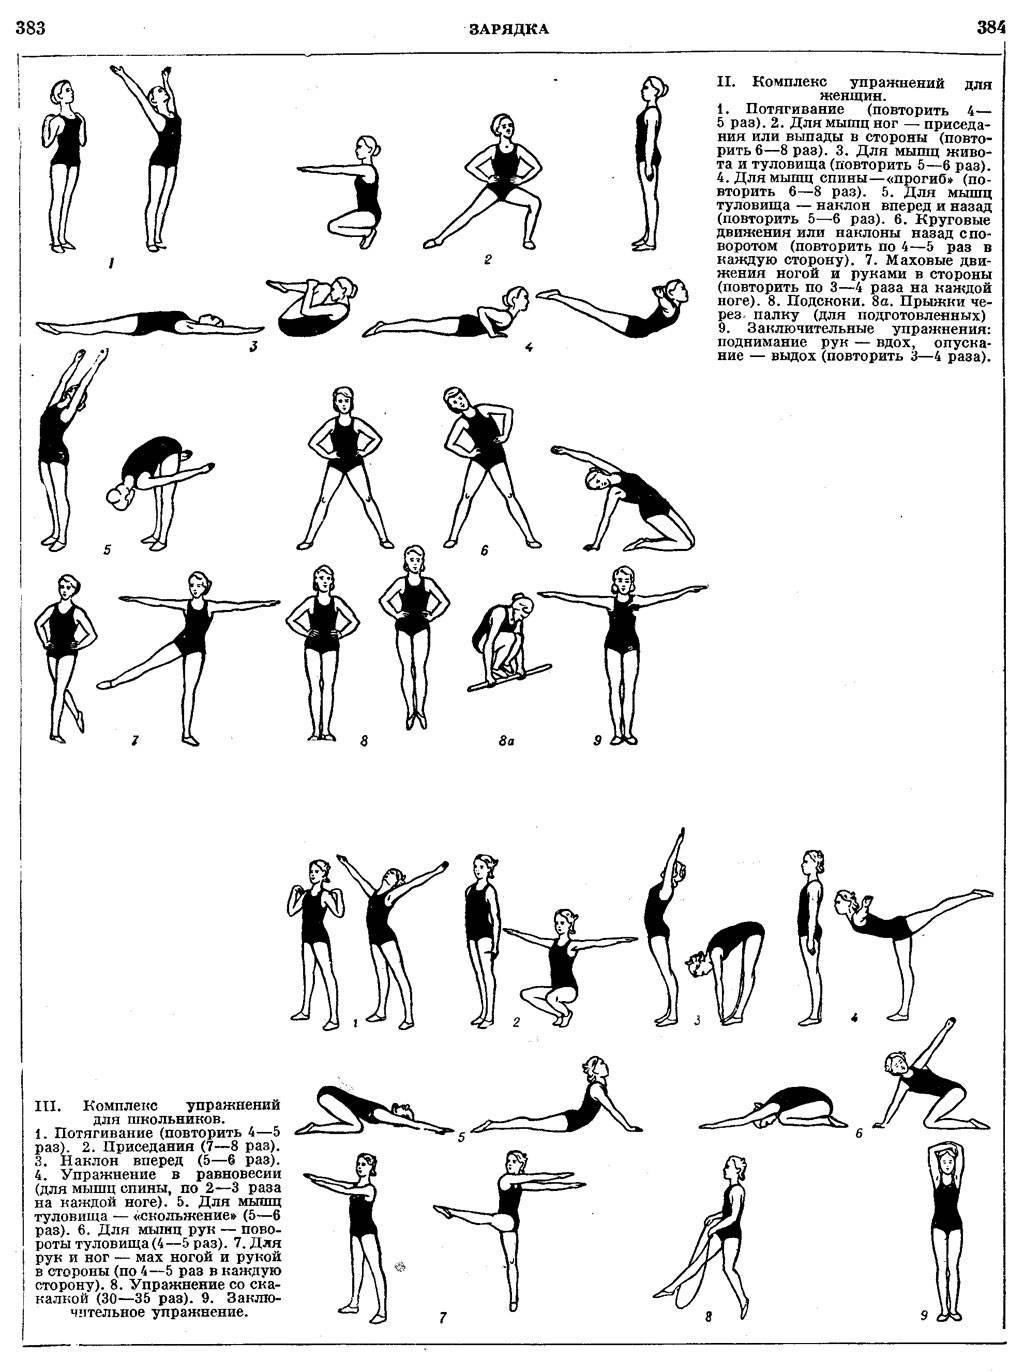 Утренняя зарядка для мужчин 40. Комплекс упражнений утренней гимнастики для женщин. Комплекс упражнений утренней зарядки таблица. Комплекс упражнений для утренней зарядки для женщин. Утренняя гимнастика СССР комплекс упражнений.